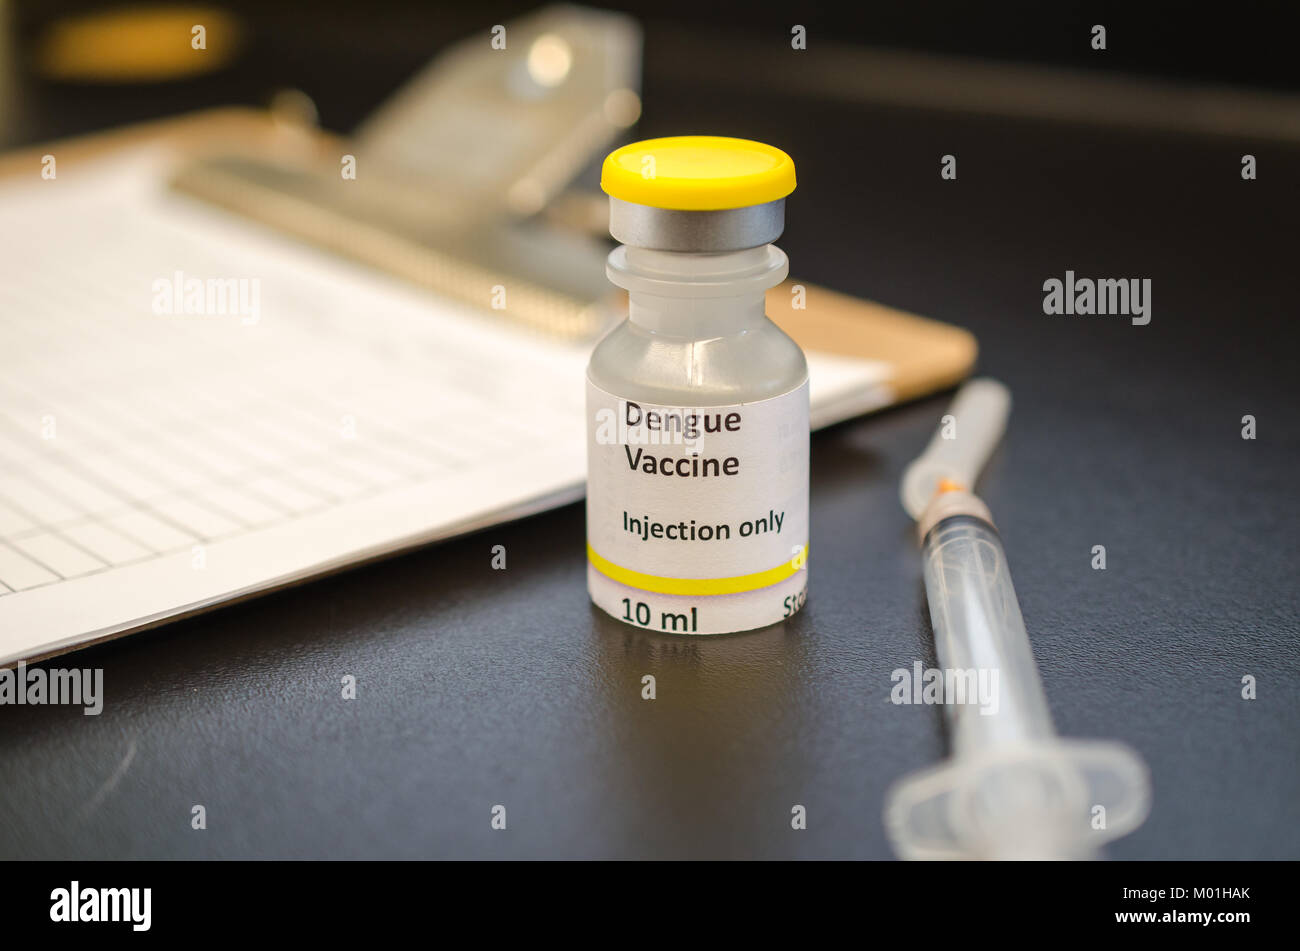 Virus Dengue flaconcino di vaccino con siringa Foto Stock